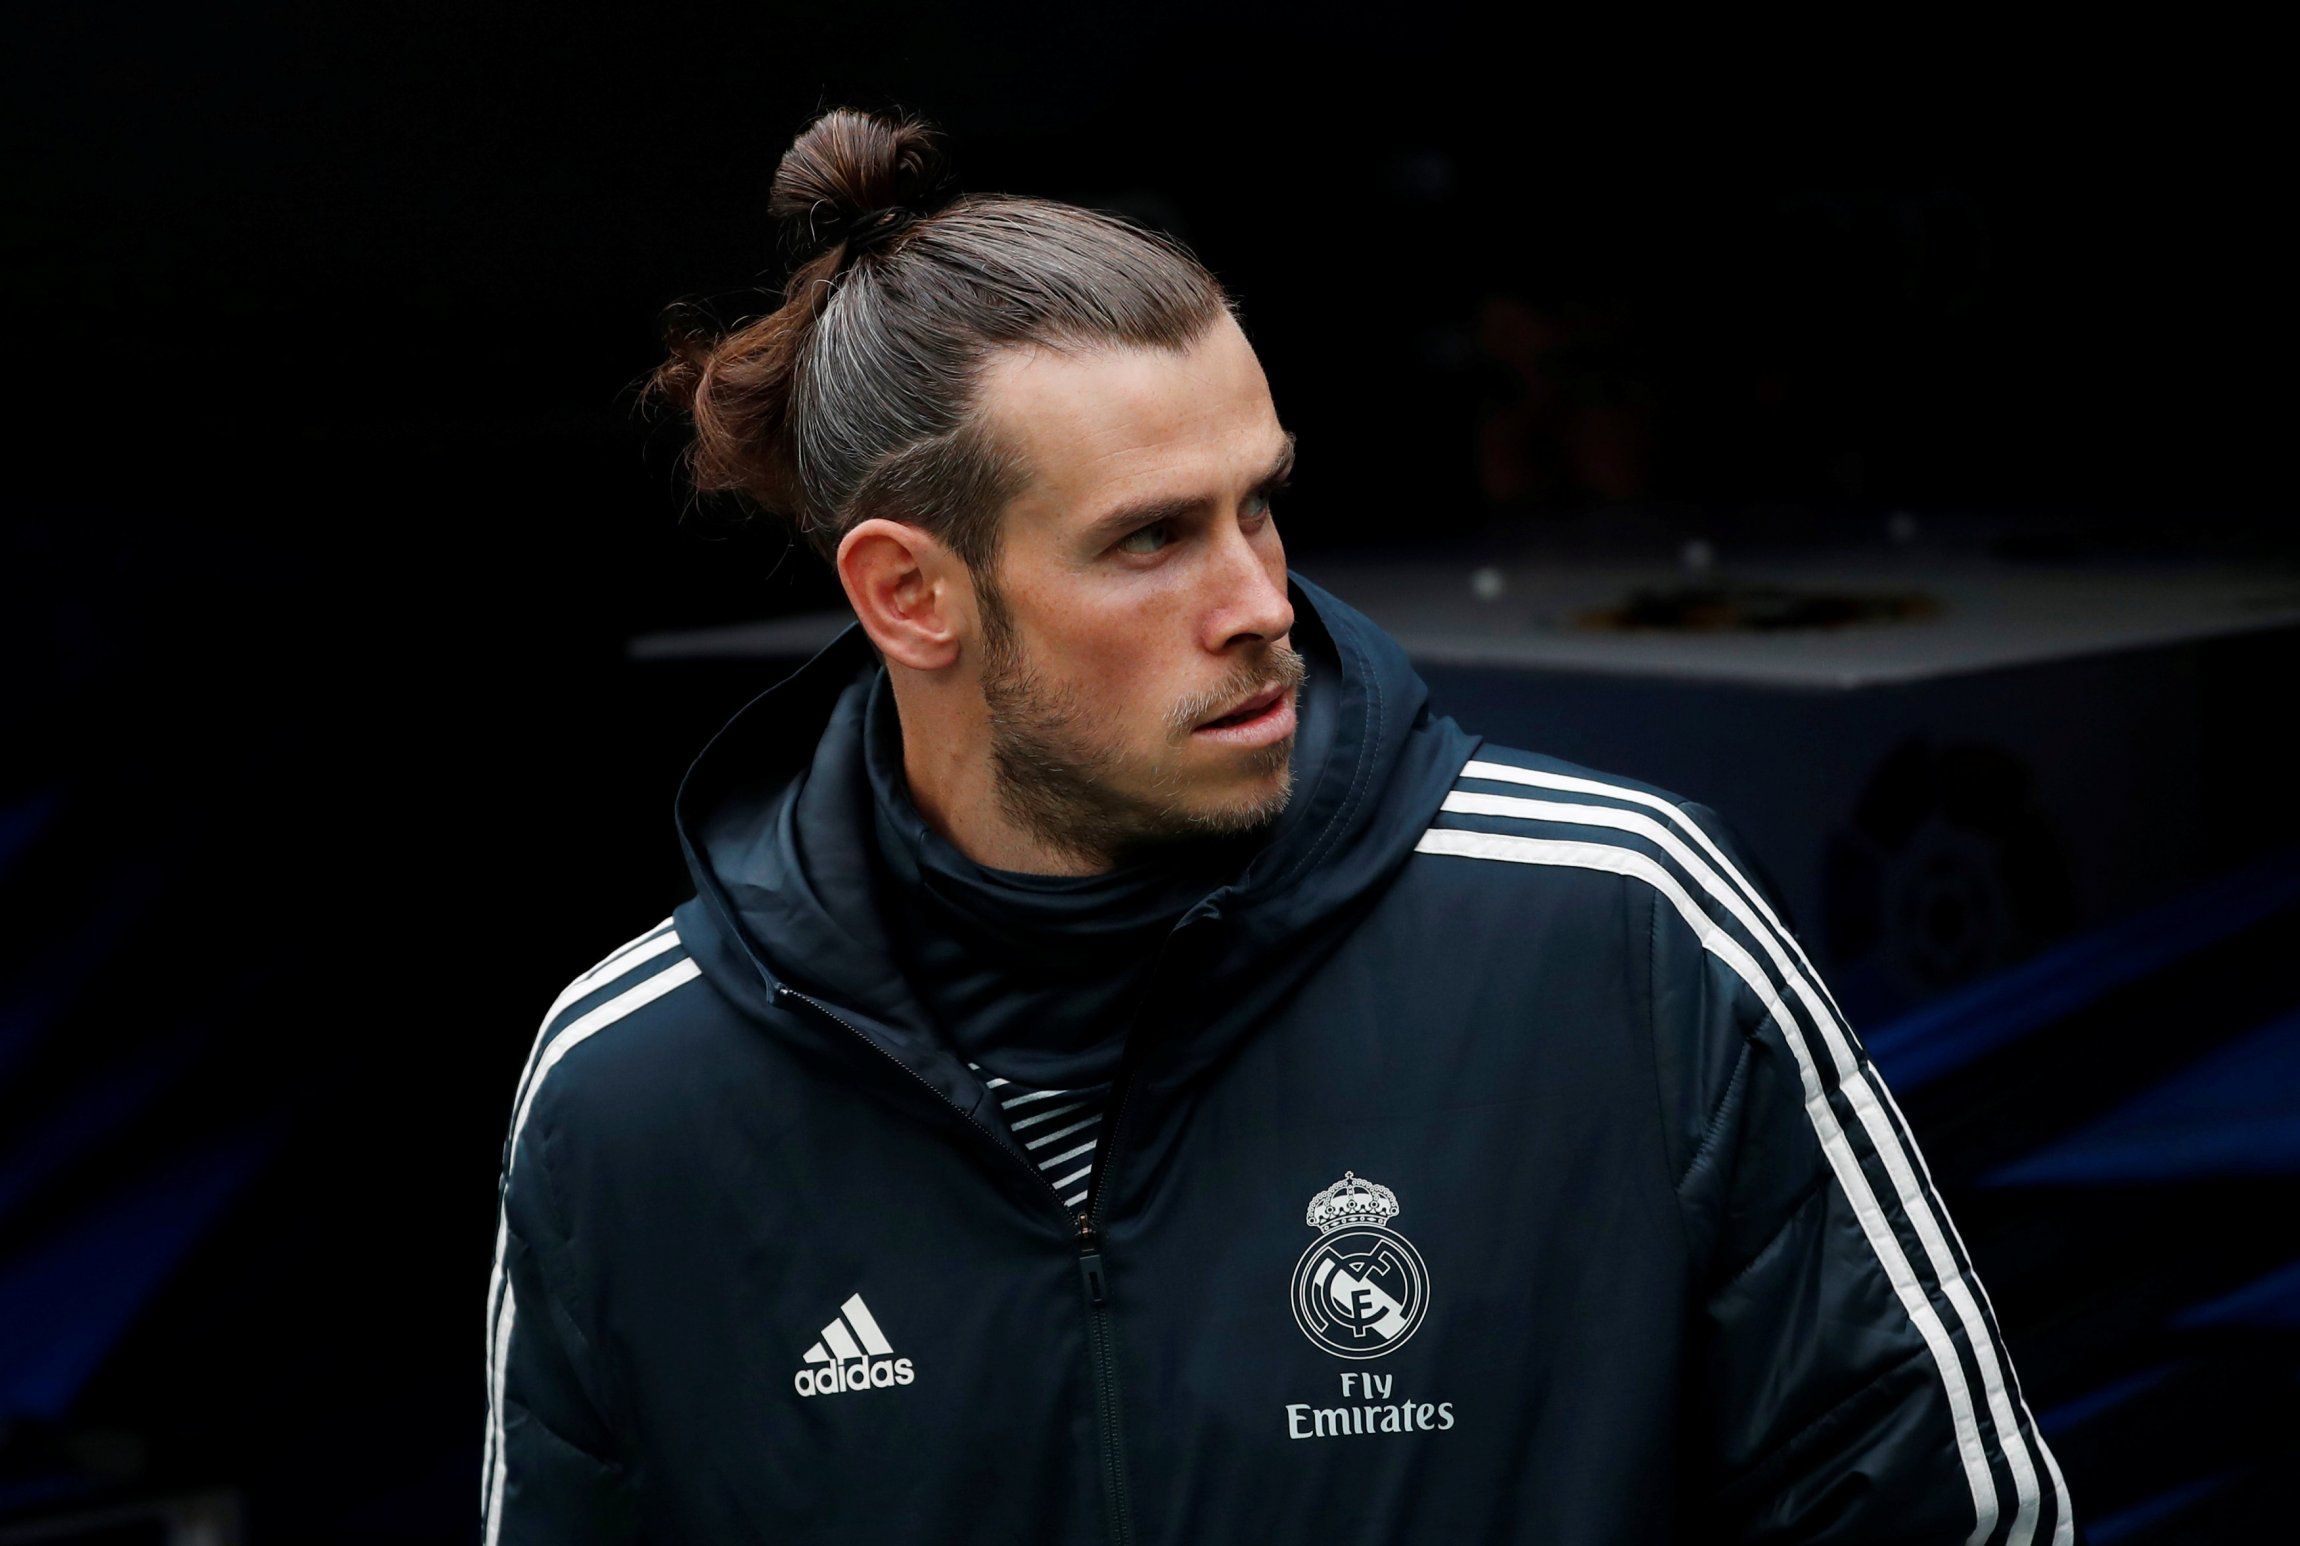 Real Madrid attacker Gareth Bale